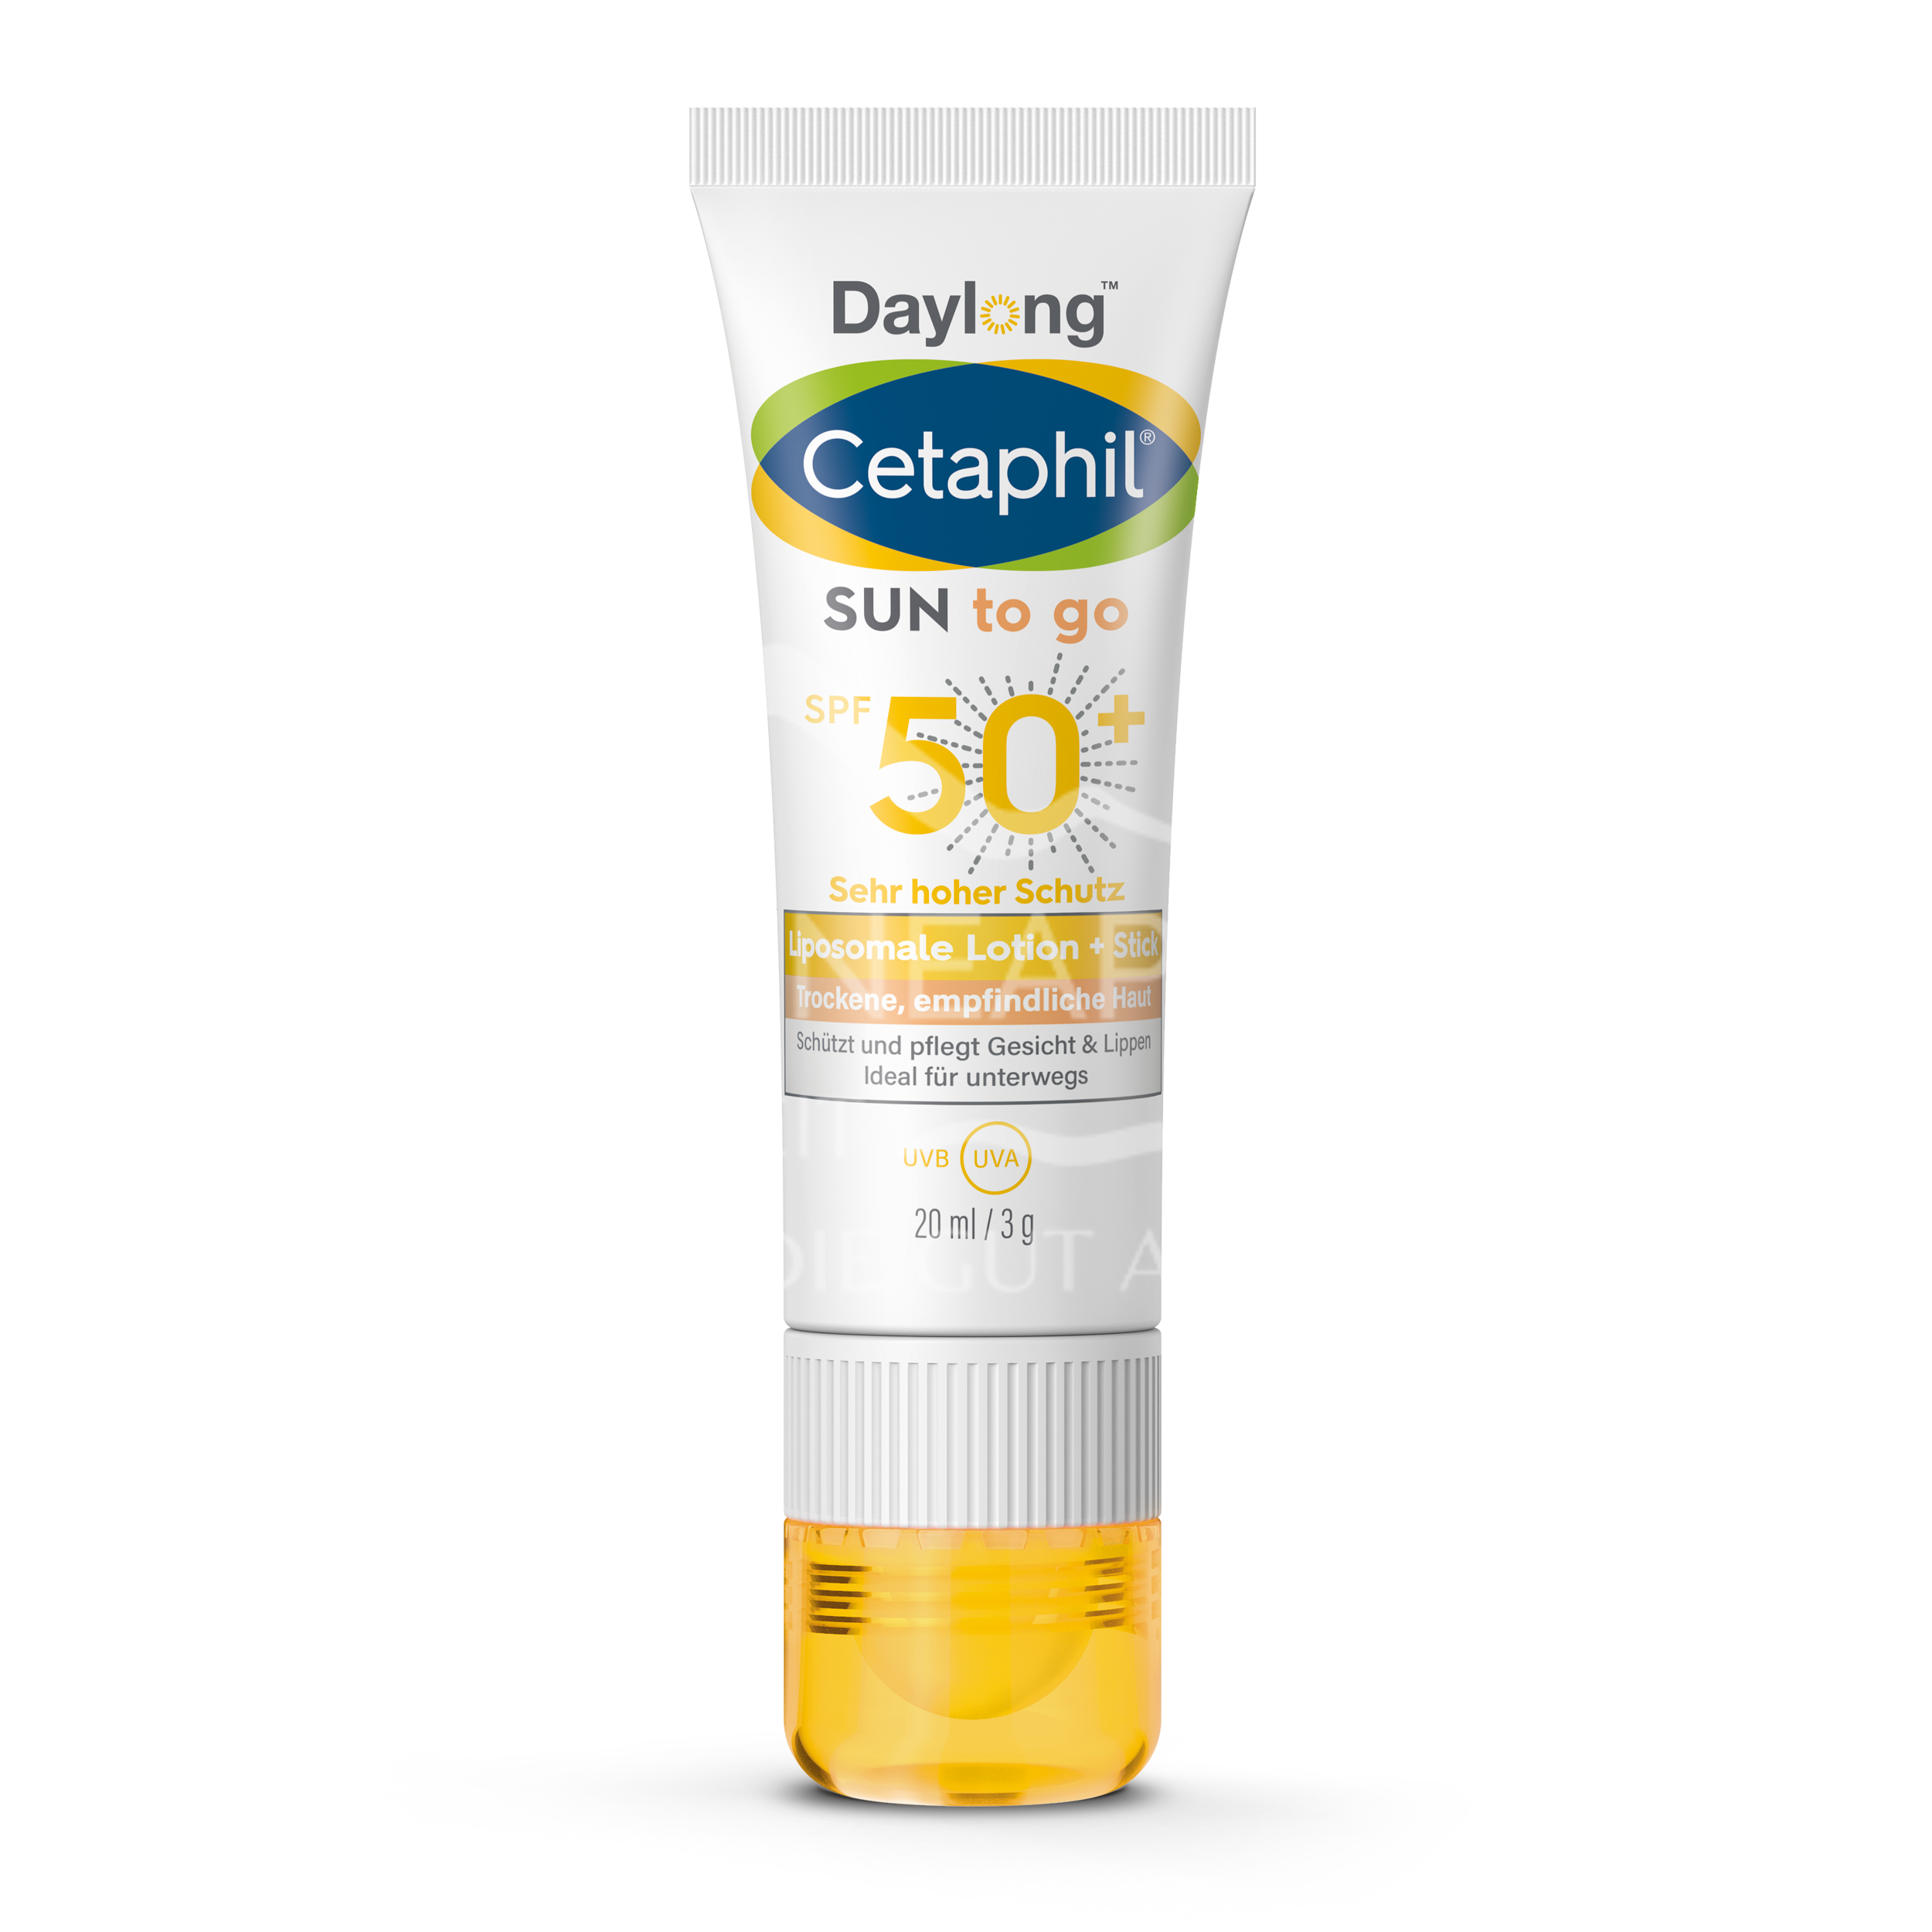 Cetaphil® Sun DaylongTM "To Go" SPF50+ Creme & Stick